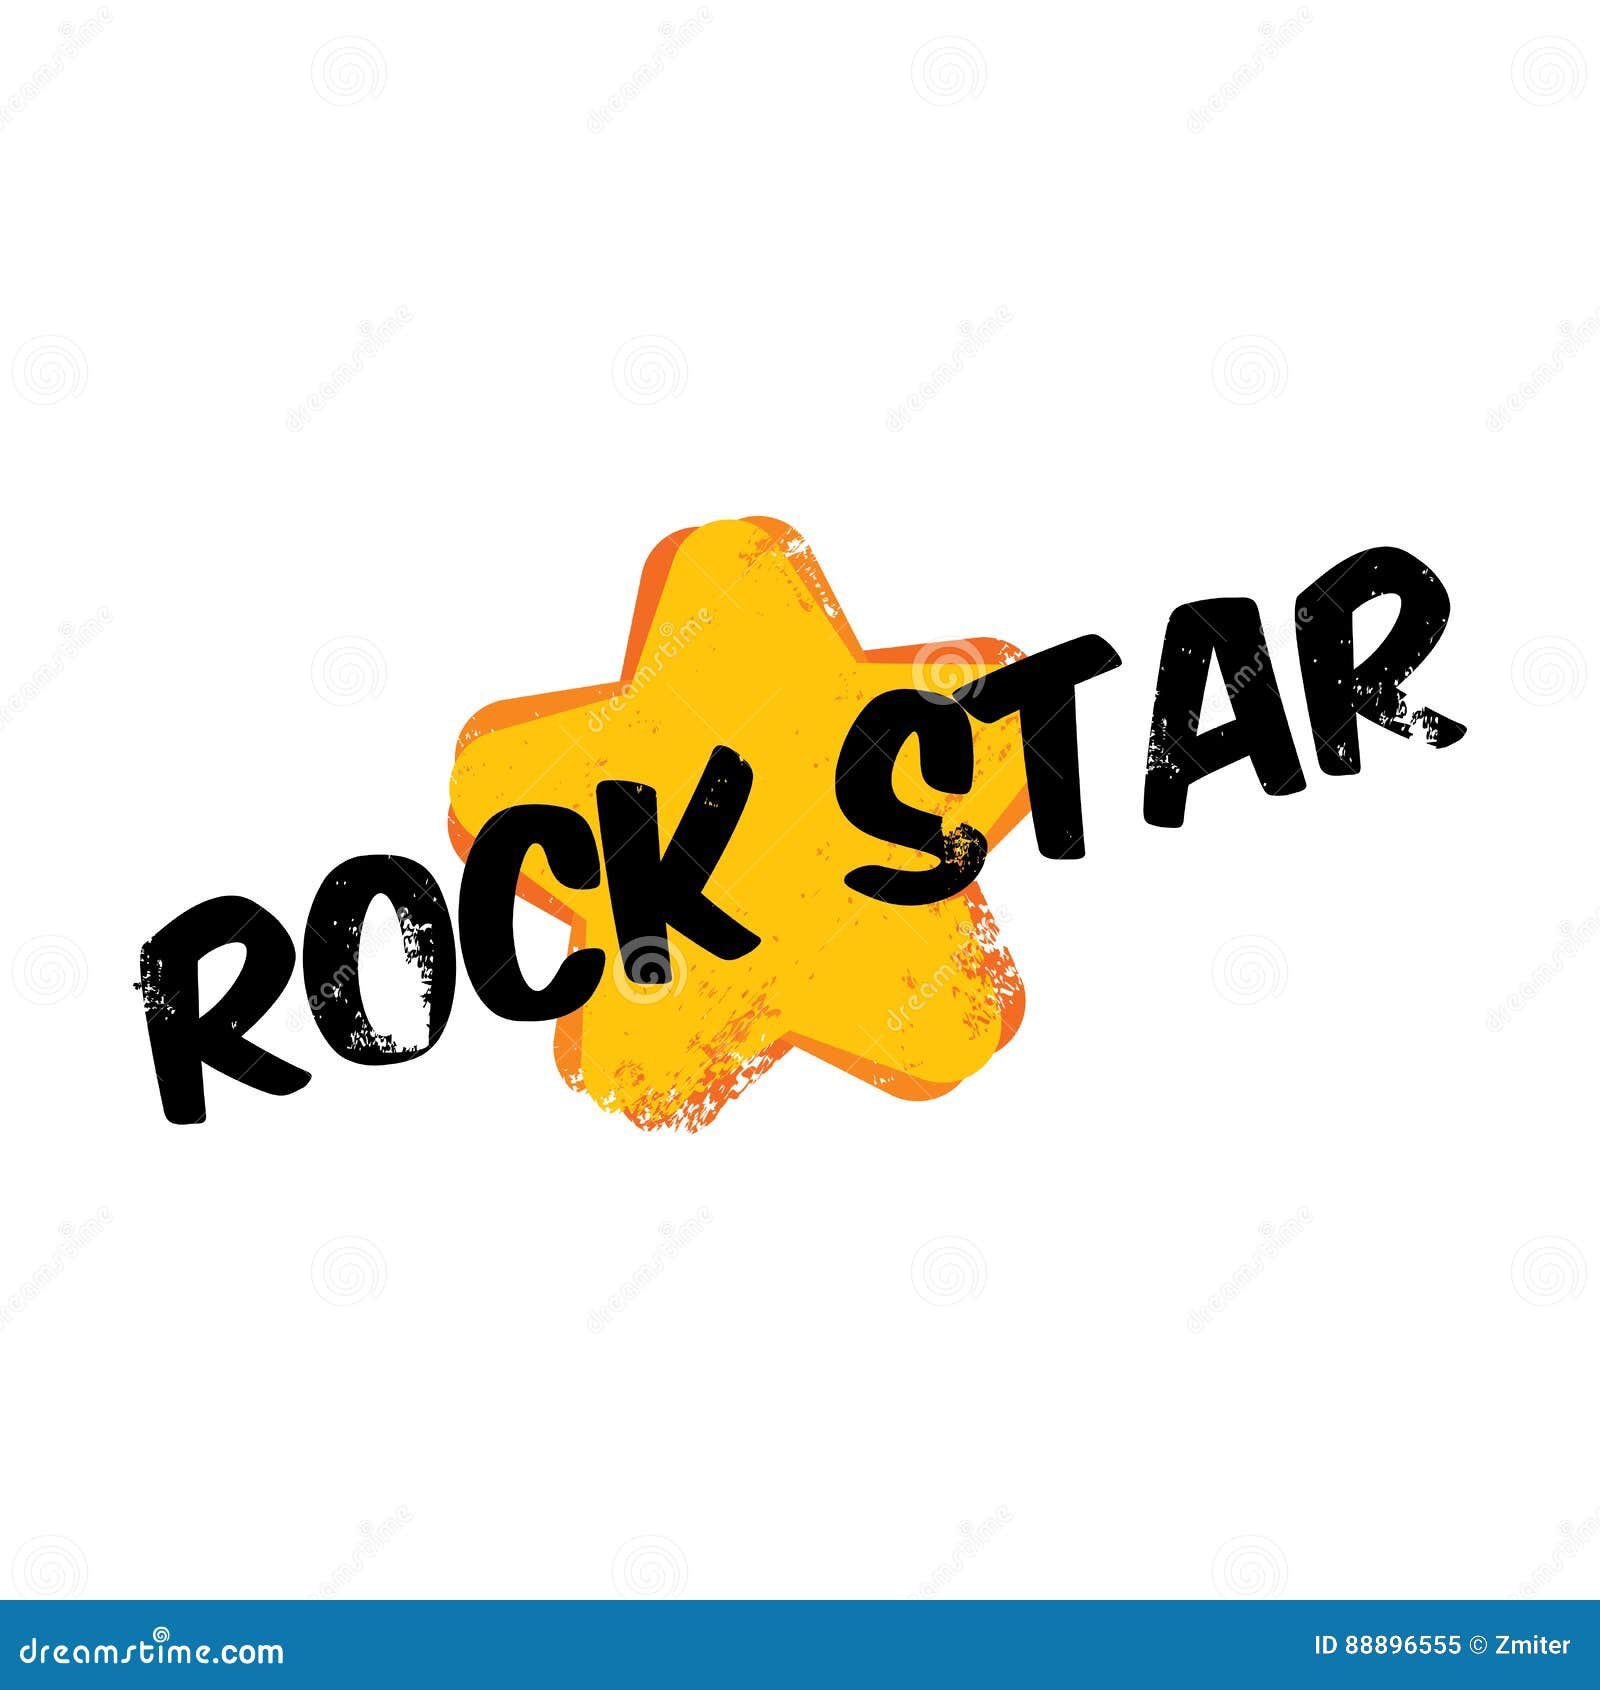 Vector Hipster Cartoon Retro Label Rock Star. Stock Vector ...